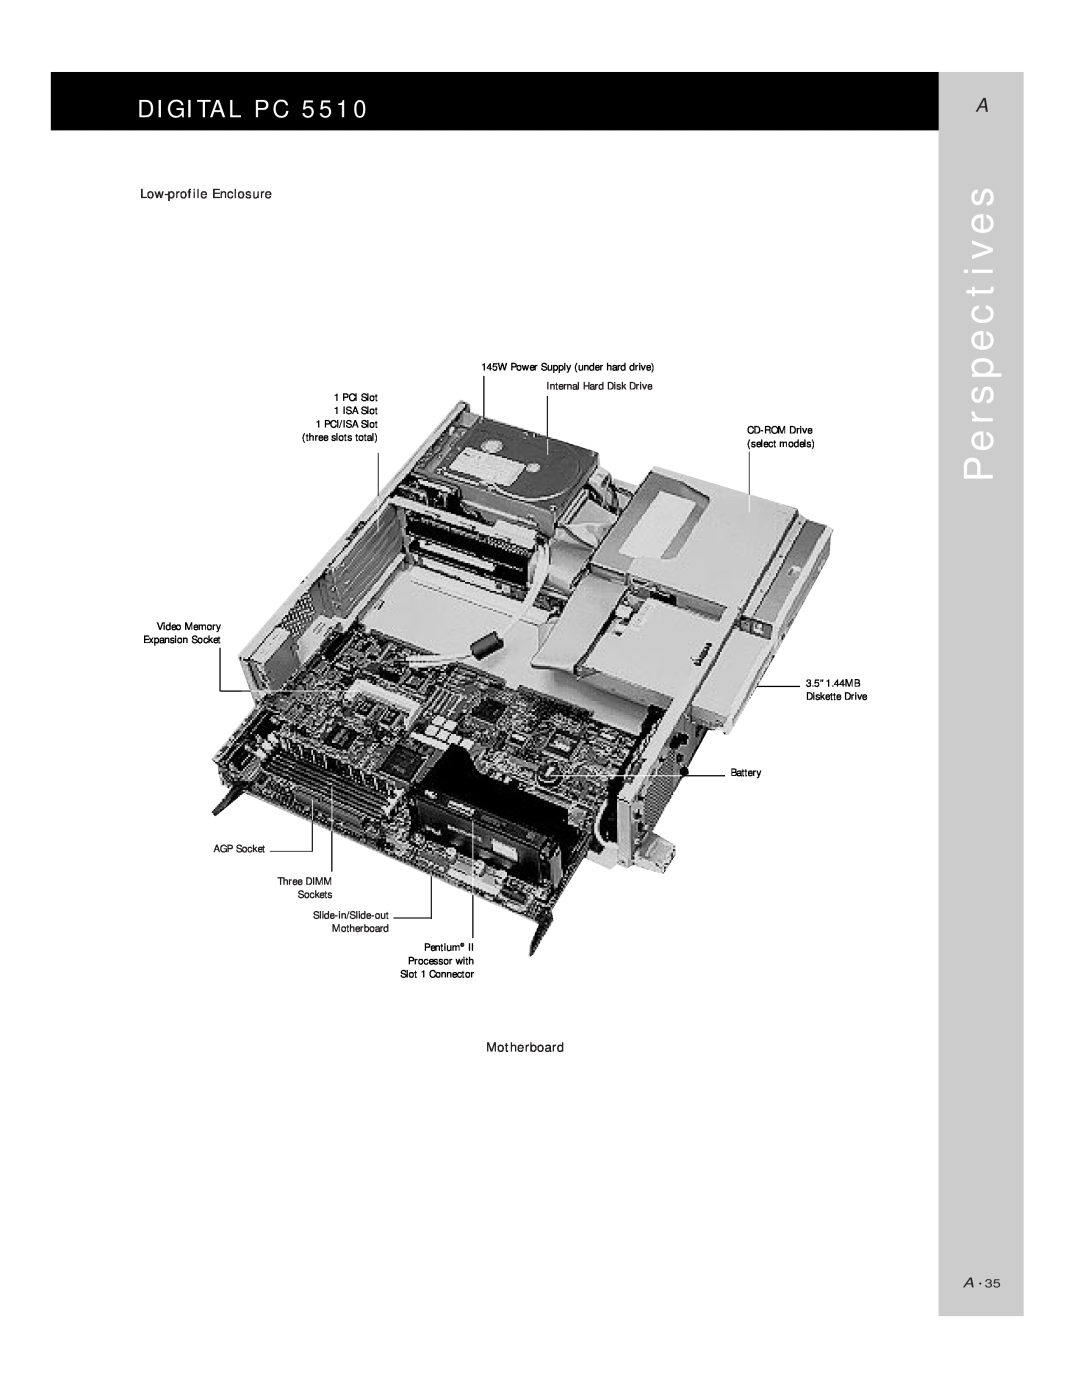 Compaq PC 5510 manual e c t i v e s, P e r s p, D I G I Ta L Pc, Low-profile Enclosure, Motherboard 